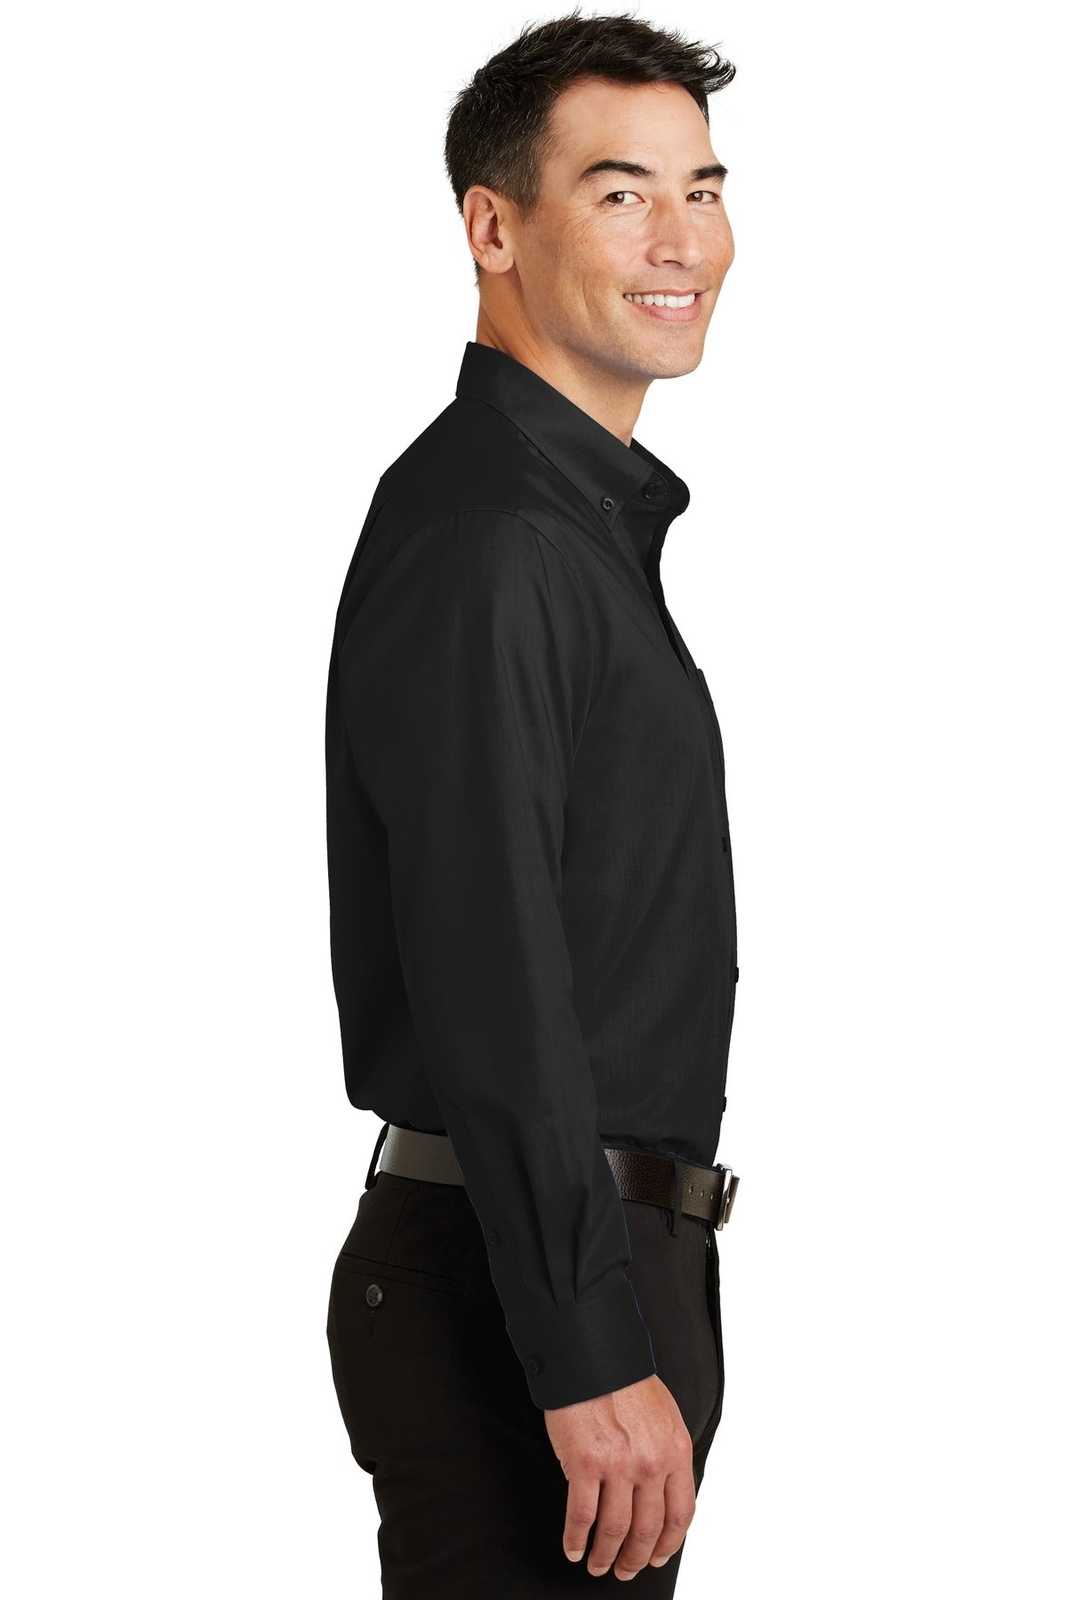 Port Authority S663 Superpro Twill Shirt - Black - HIT a Double - 3